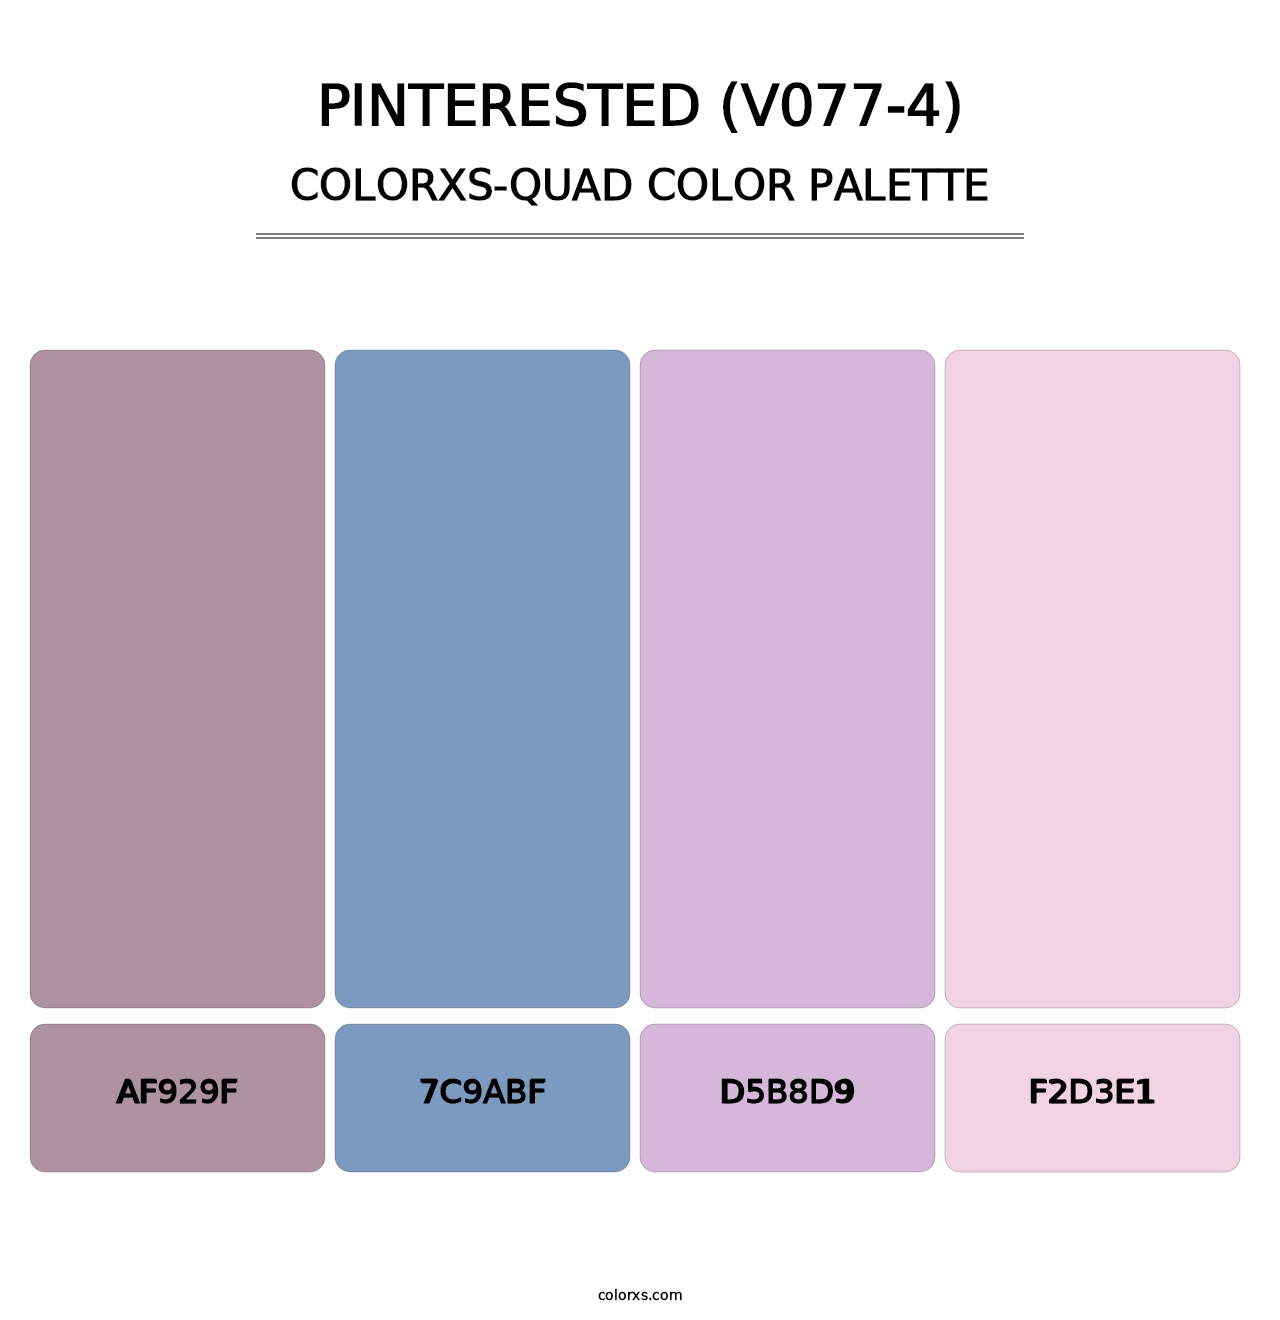 Pinterested (V077-4) - Colorxs Quad Palette